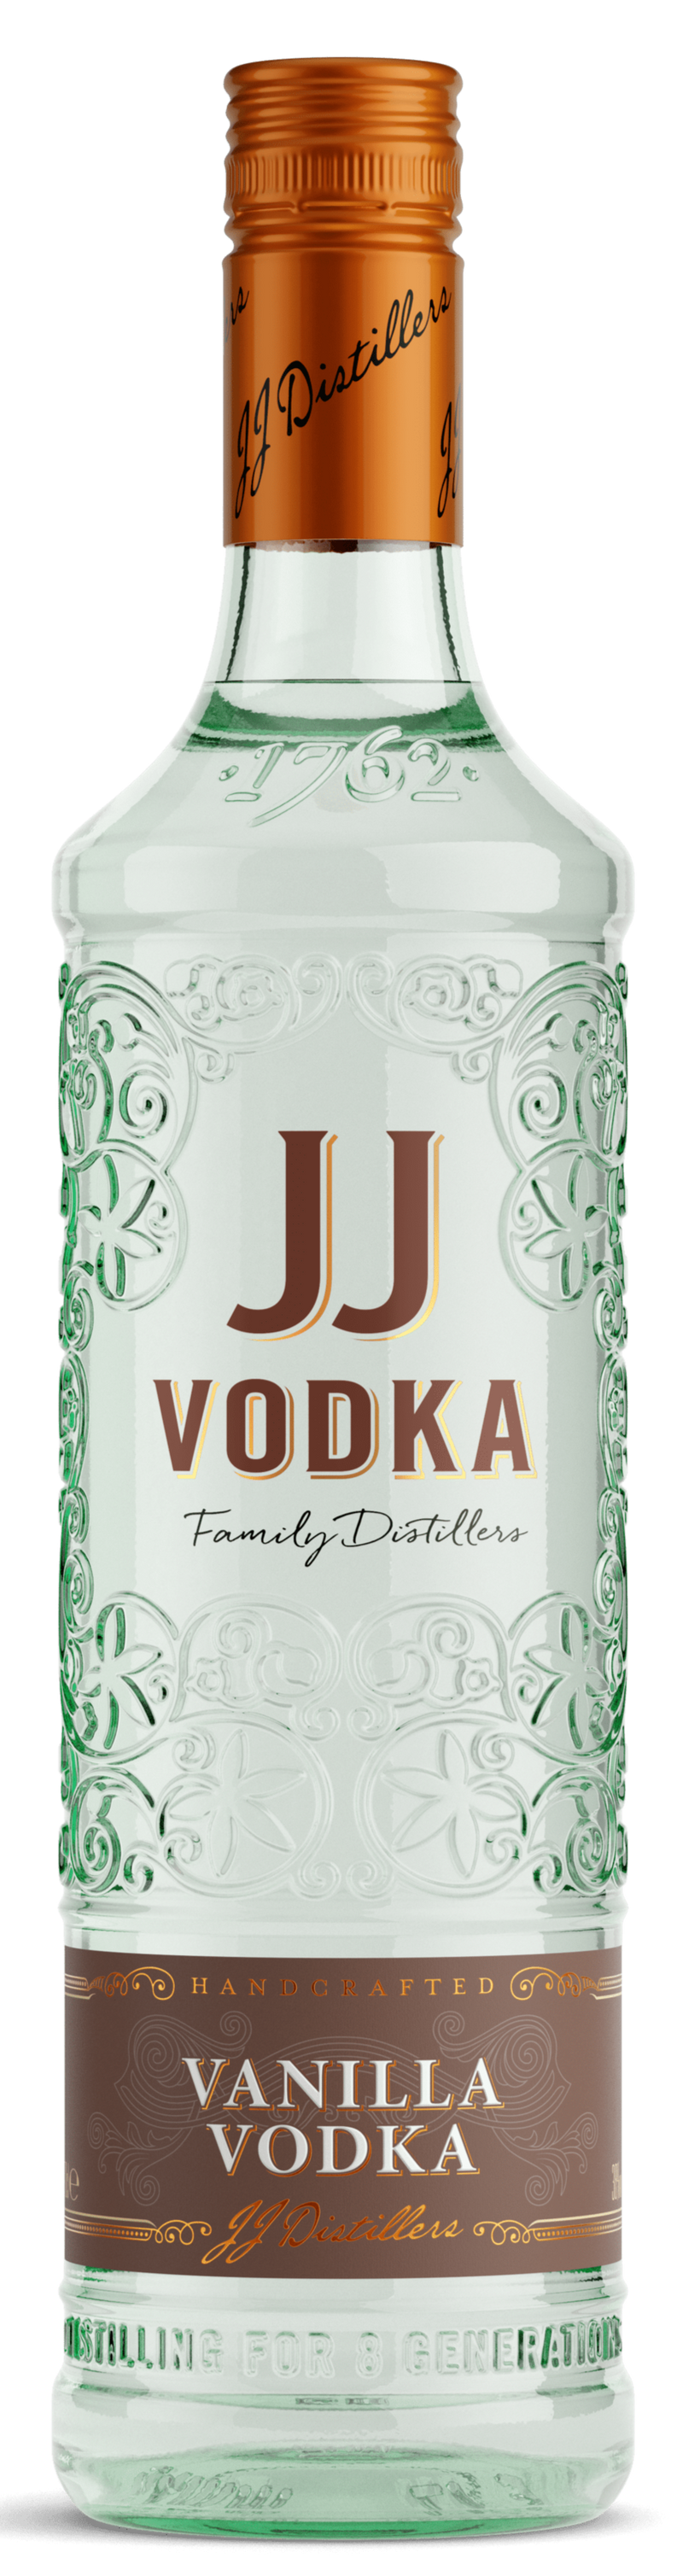 J.J. Whitley Vanilla Vodka 70cl